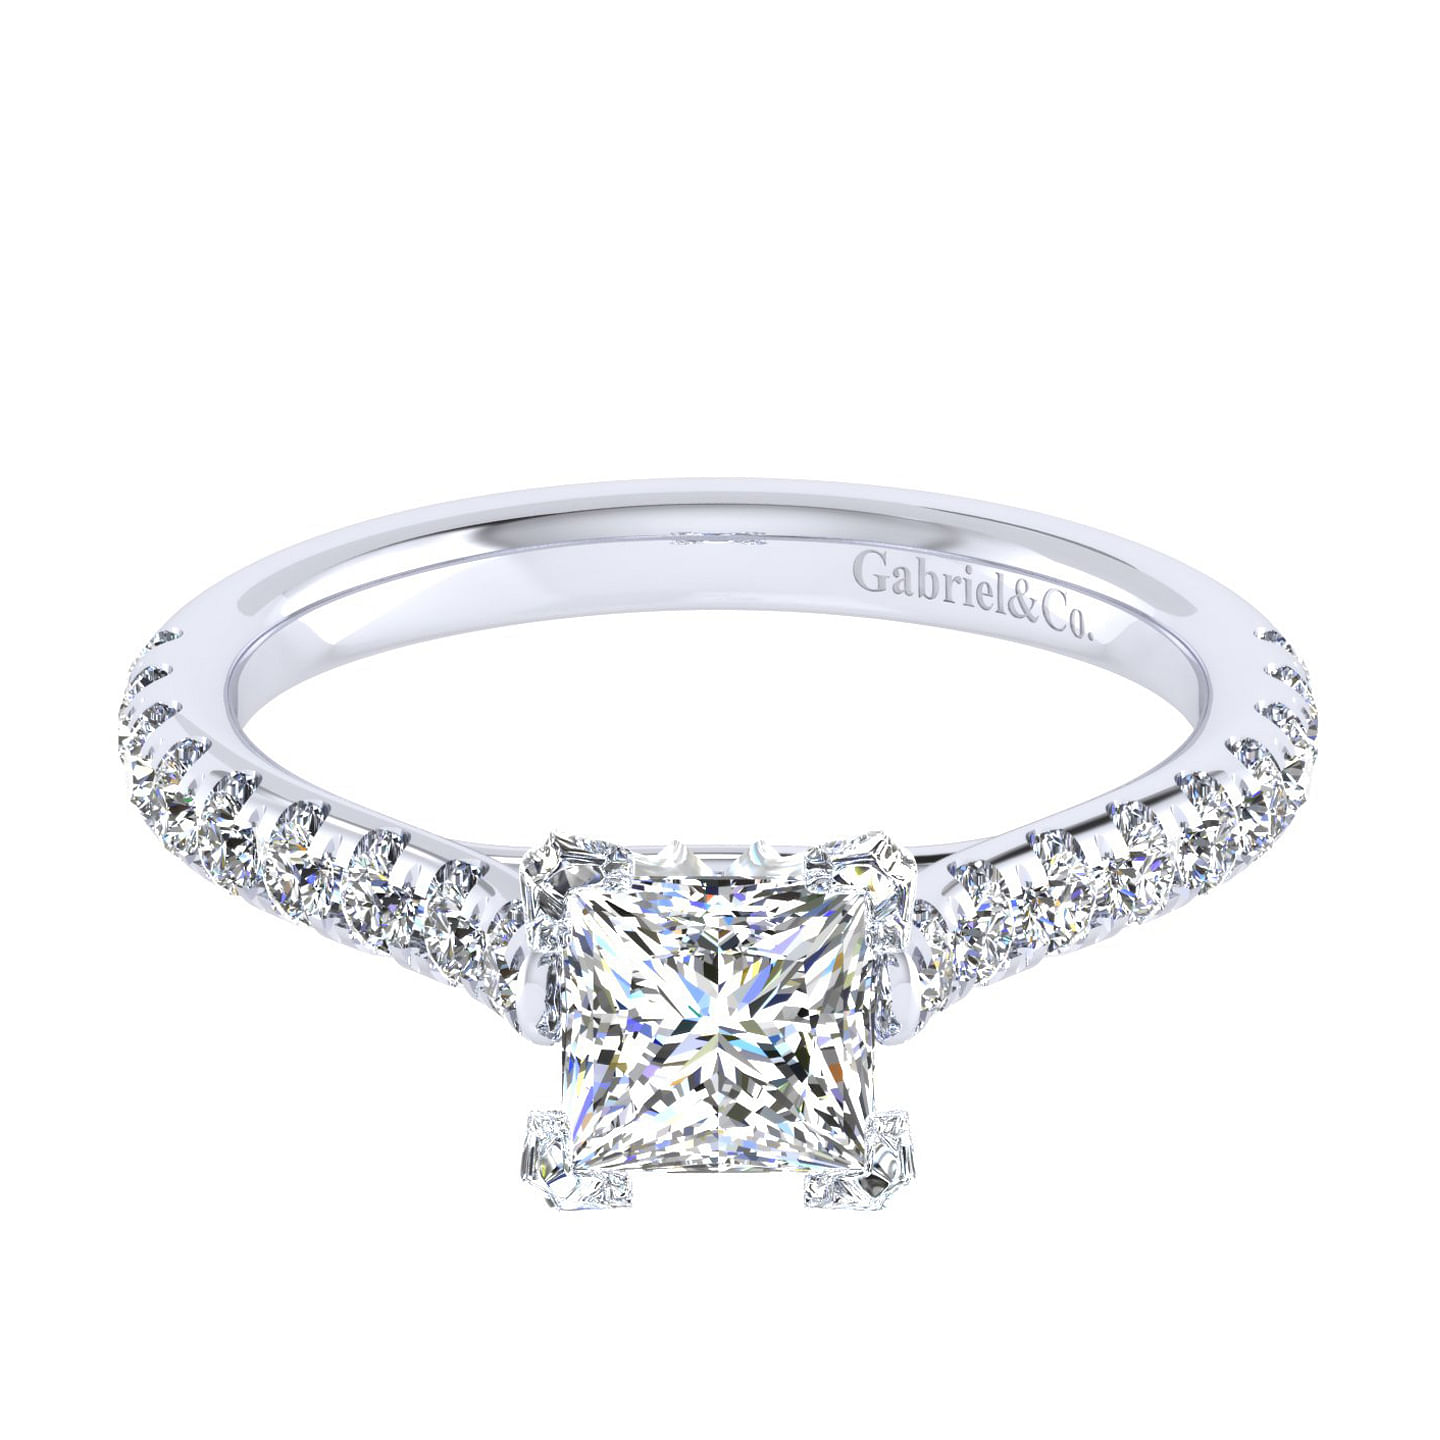 Erica - 14K White Gold Princess Cut Diamond Engagement Ring